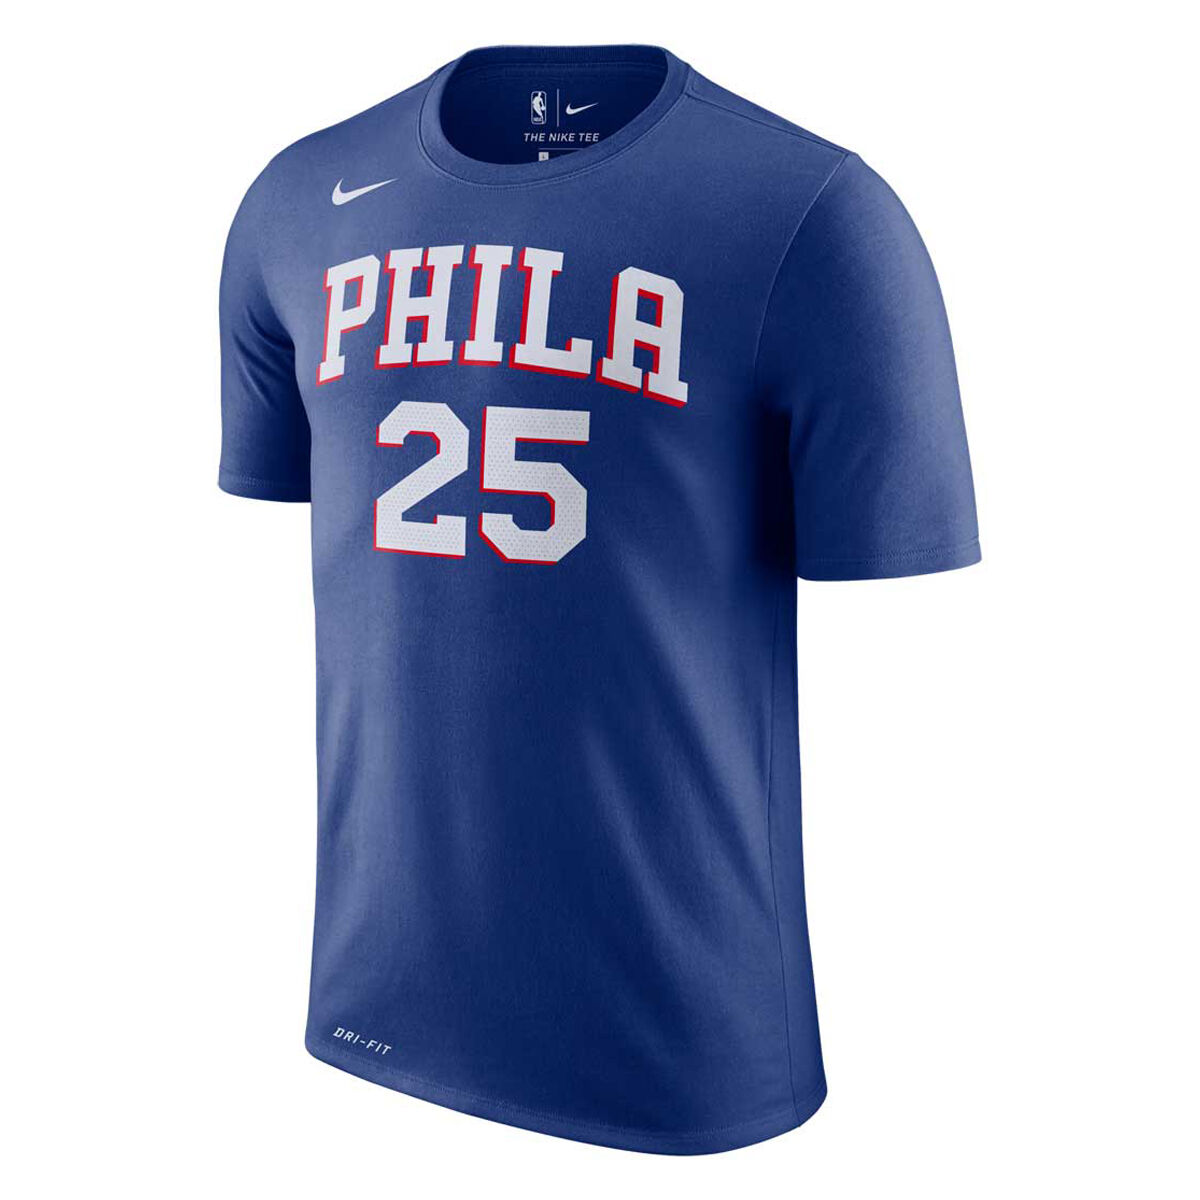 Philadelphia 76ers Merchandise - rebel